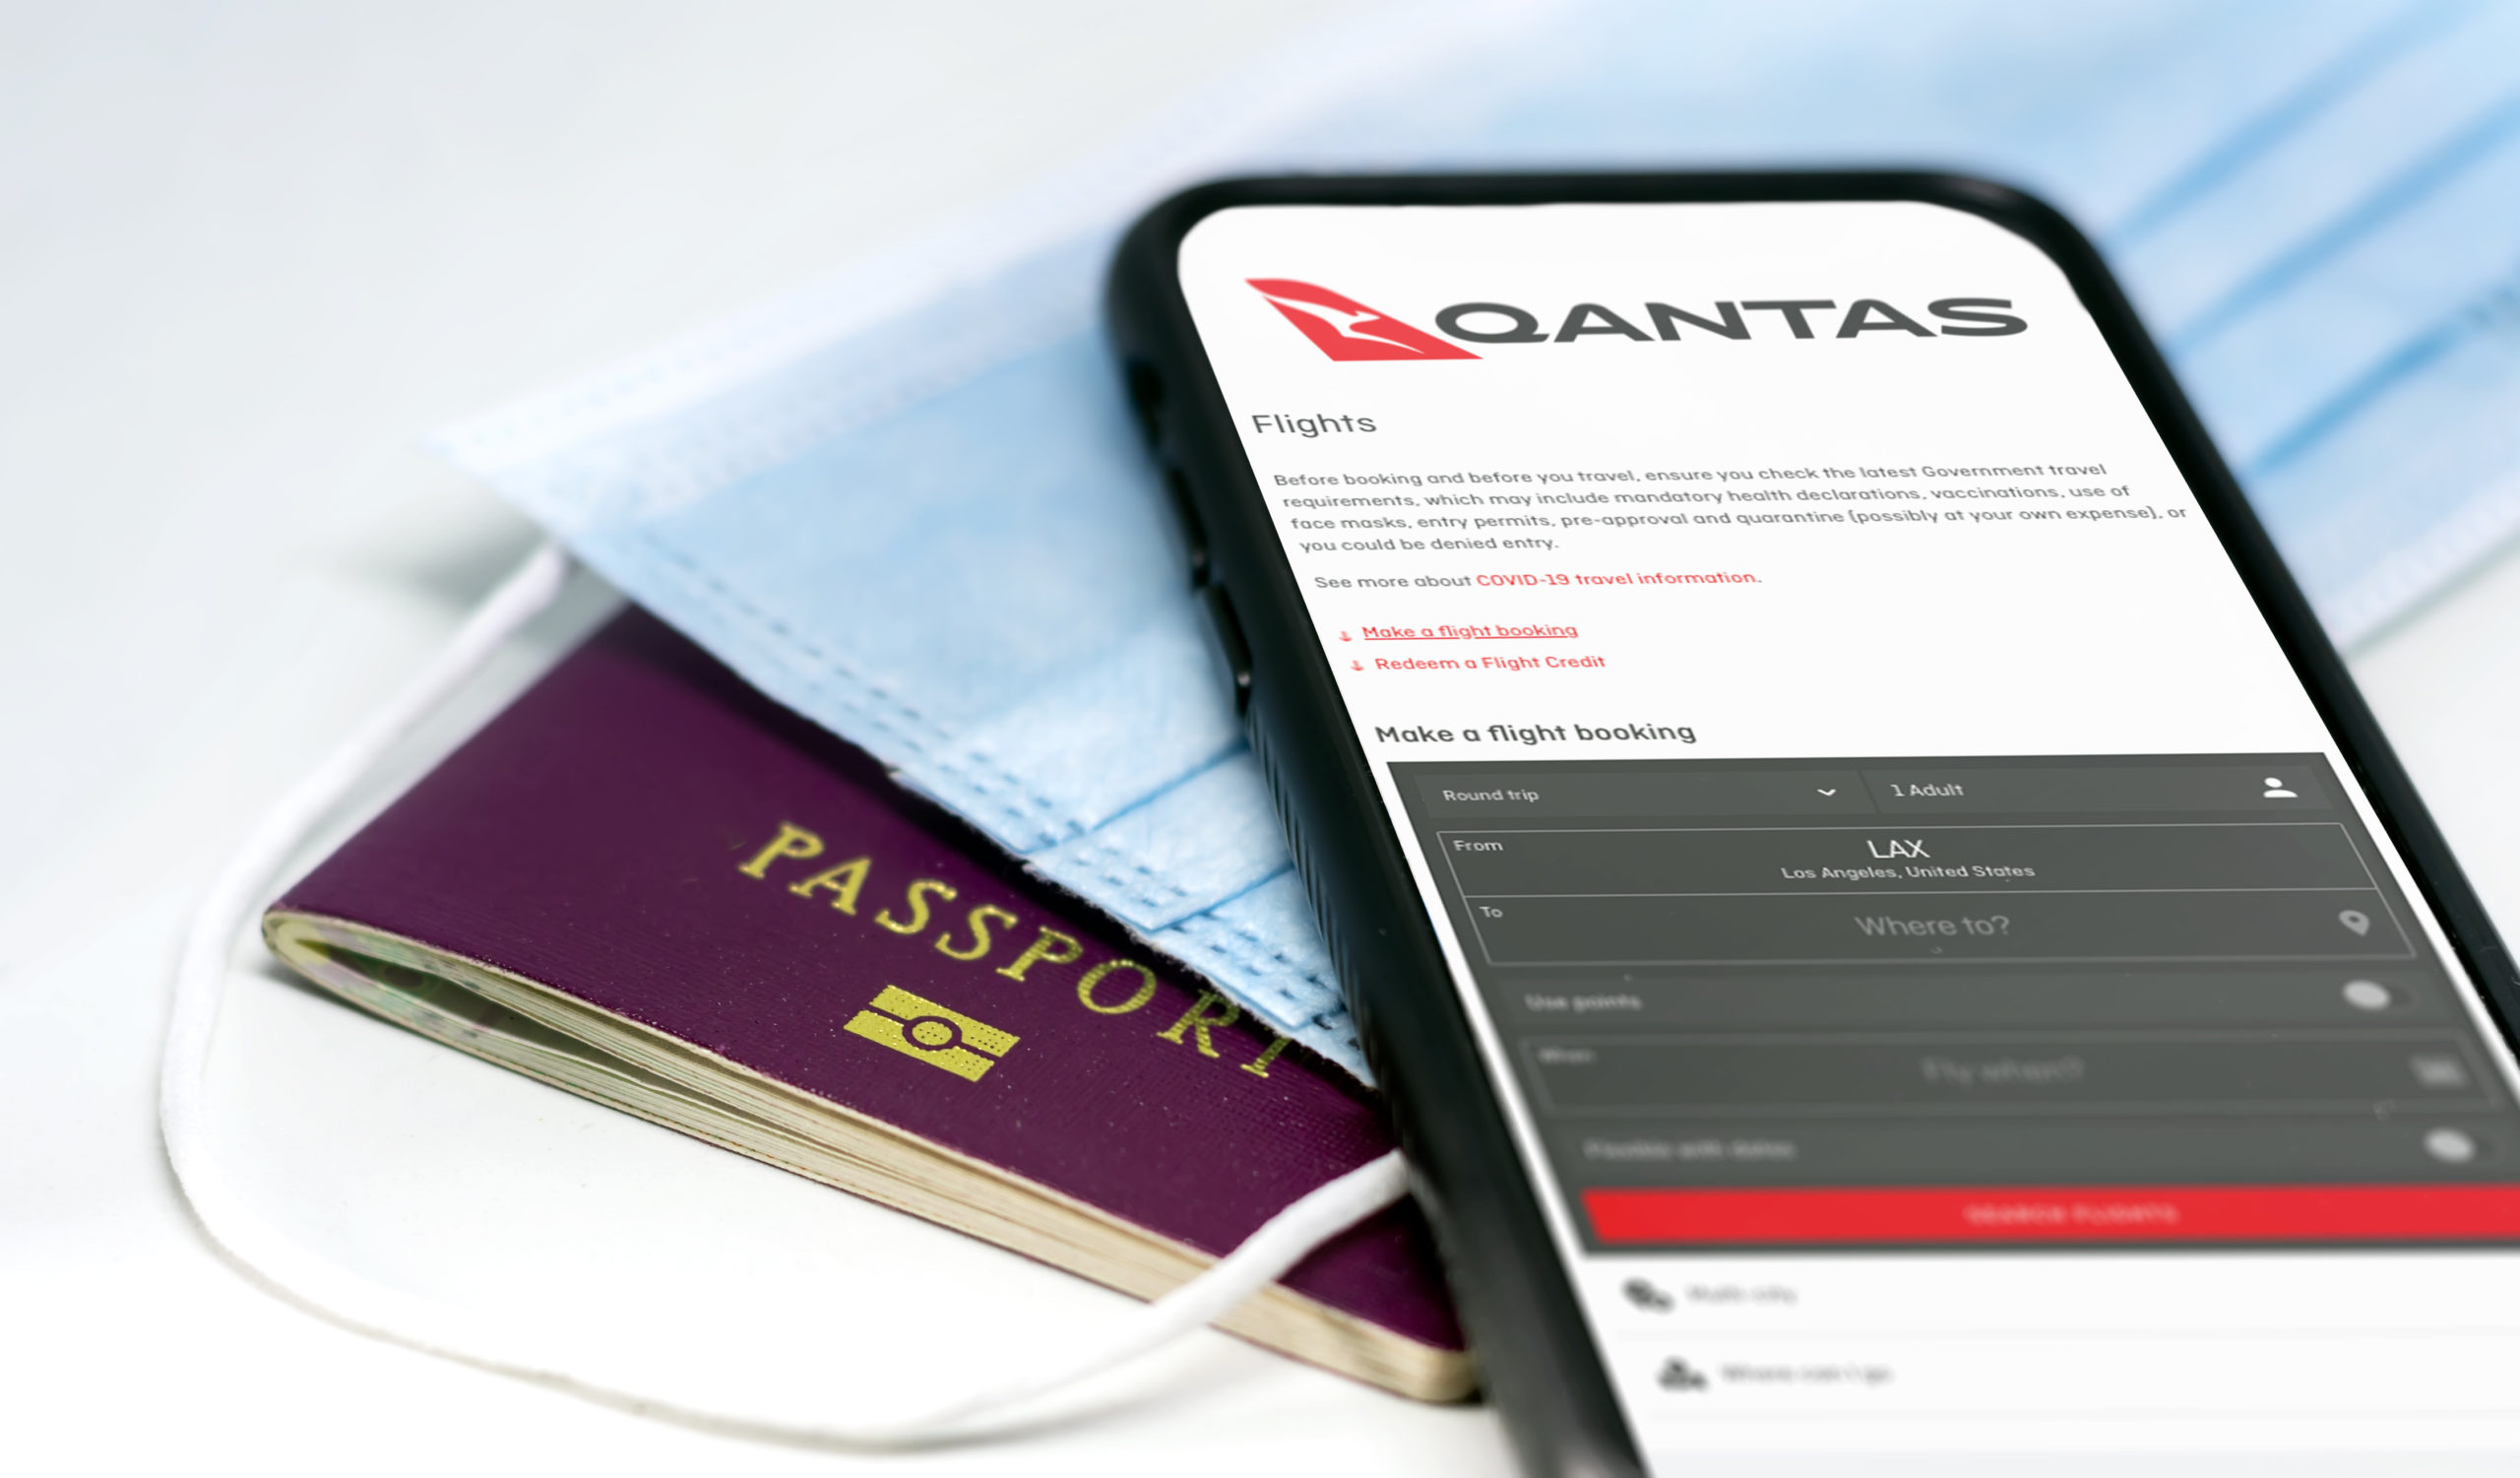 Qantas booking interface